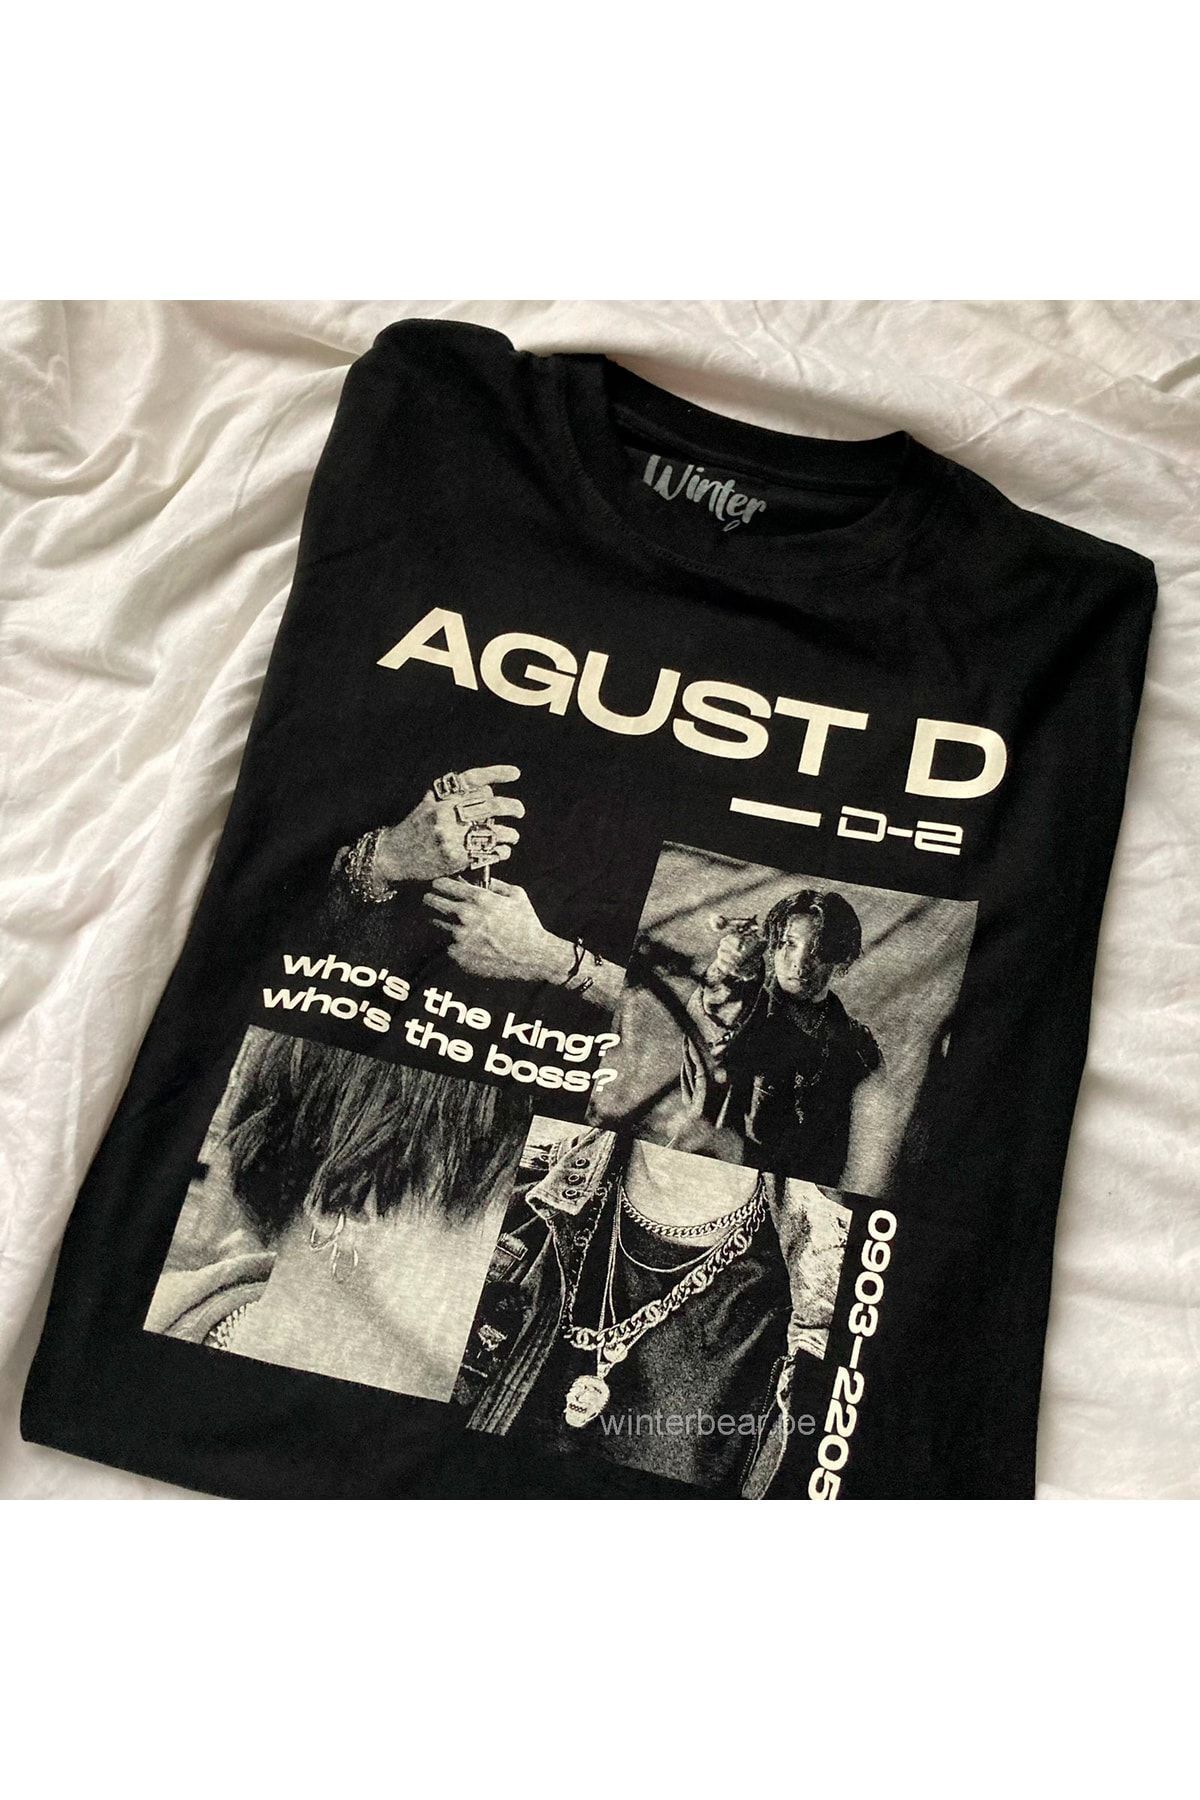 oneagılyazı Favoriconsept - Bts - Suga Agust D Who's The King Boss Unisex Tişört